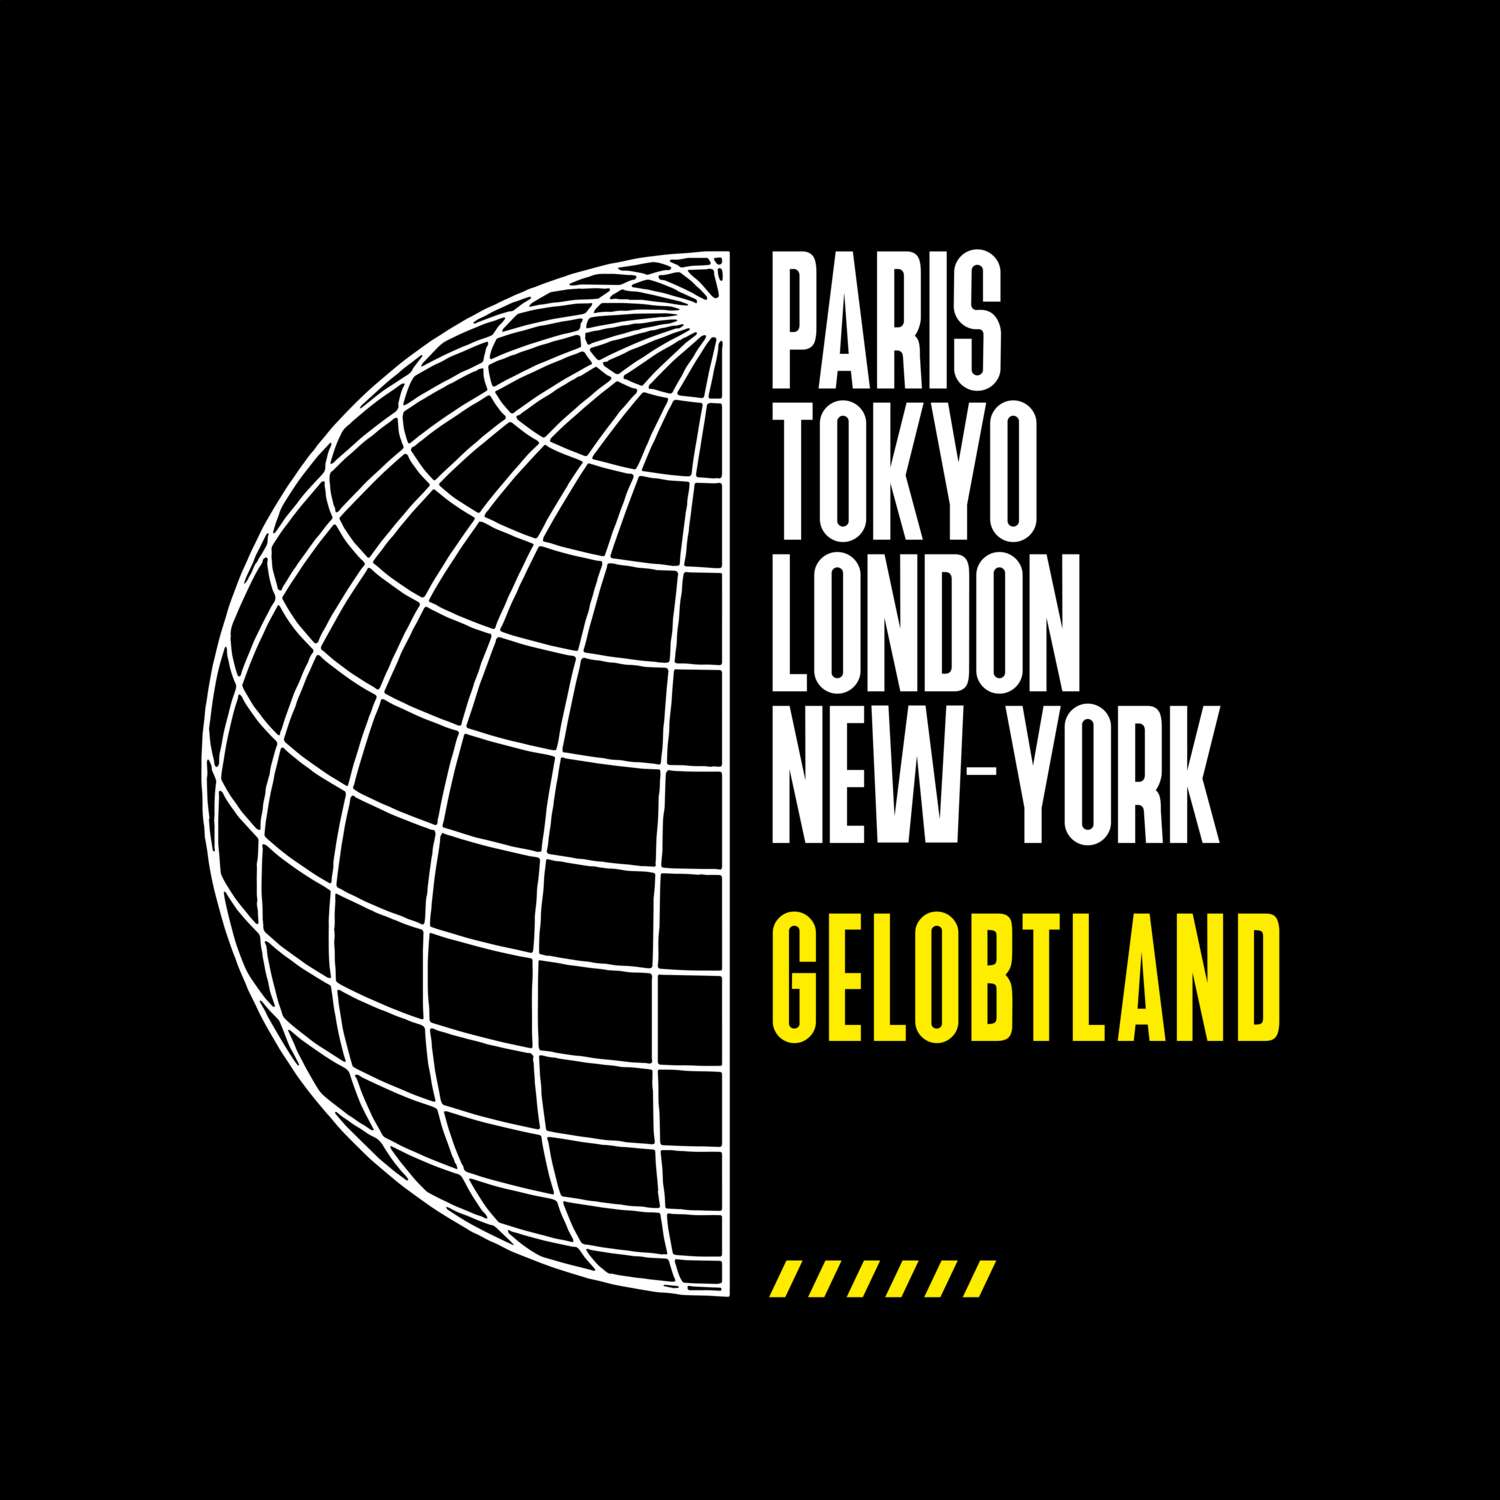 Gelobtland T-Shirt »Paris Tokyo London«